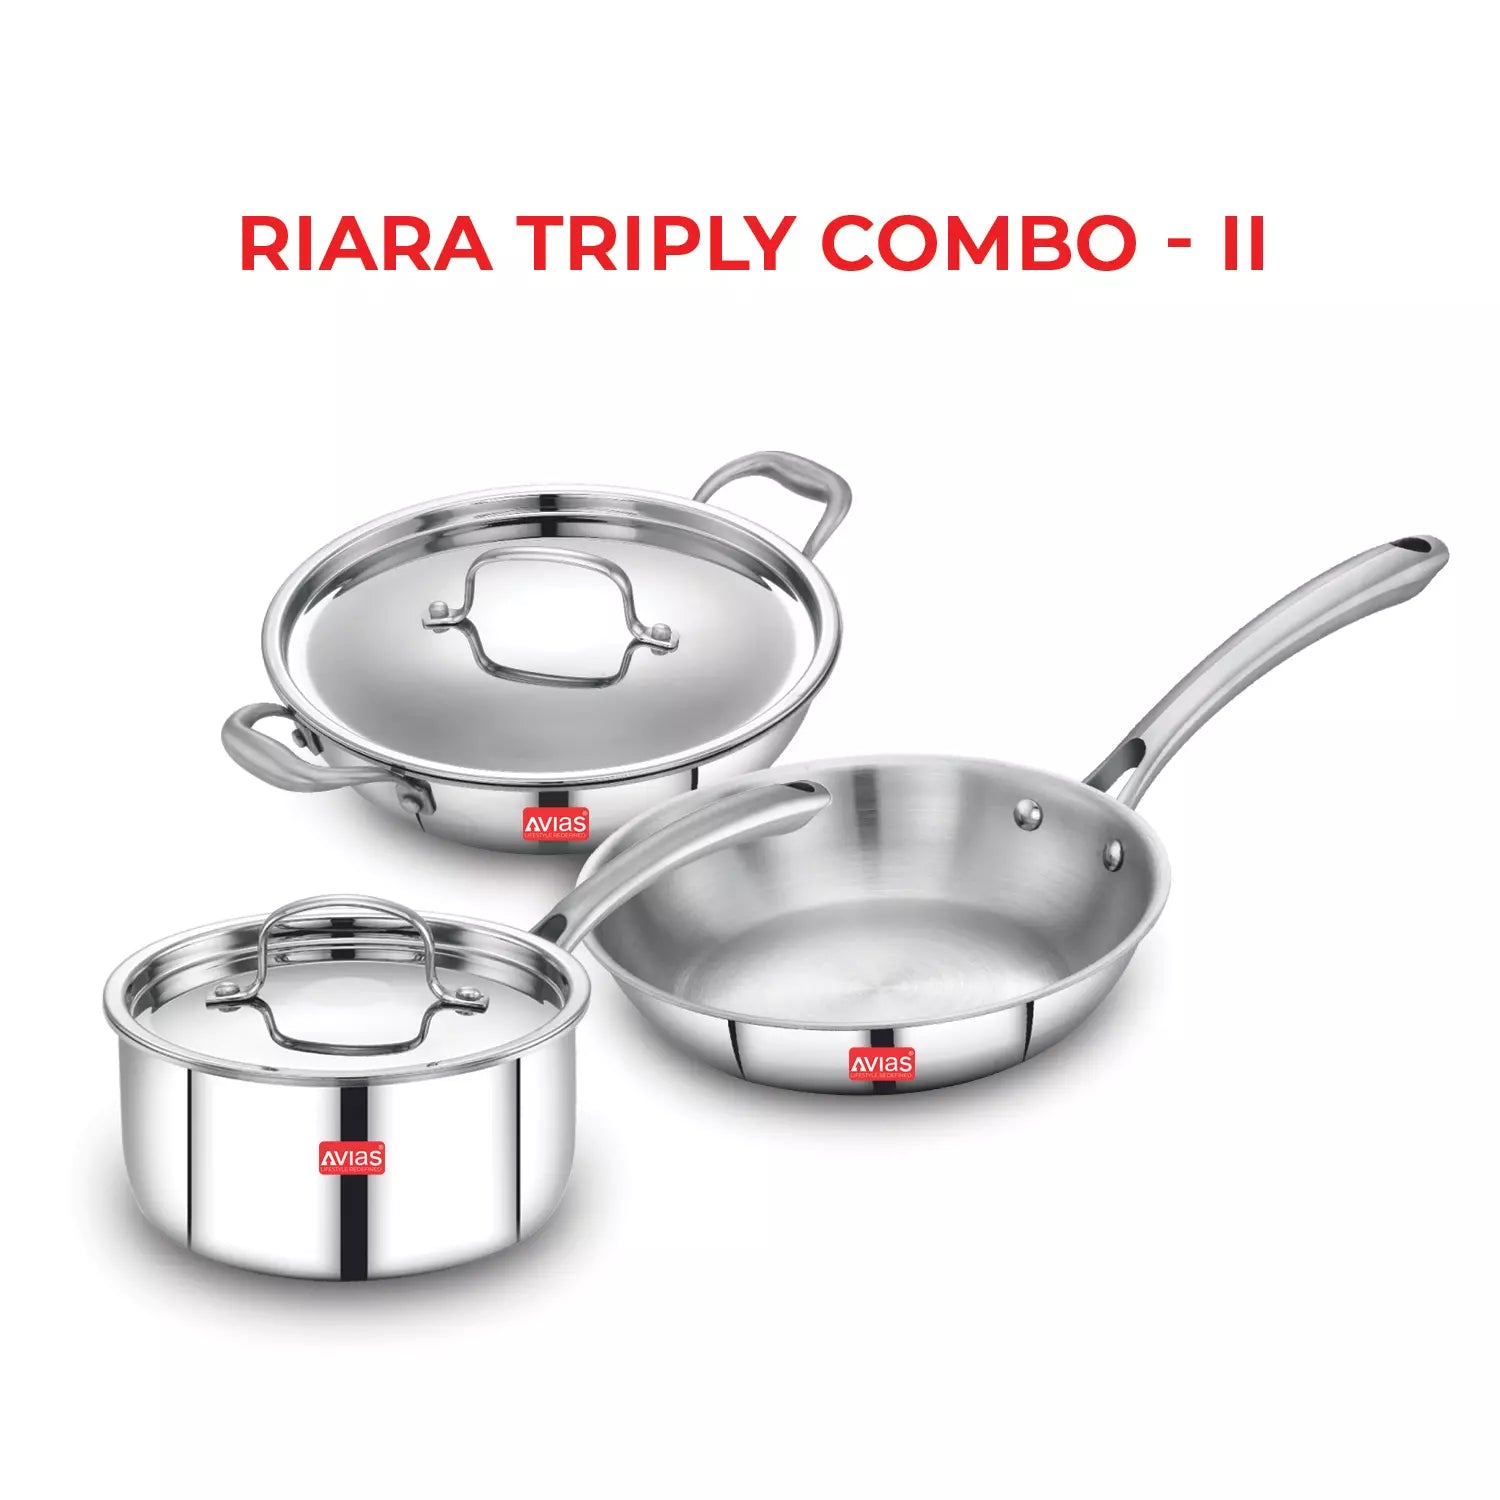 AVIAS Stainless steel Triply Combo II - Riara (Kadai 22cm + Frypan 22cm + Saucepan 14cm)